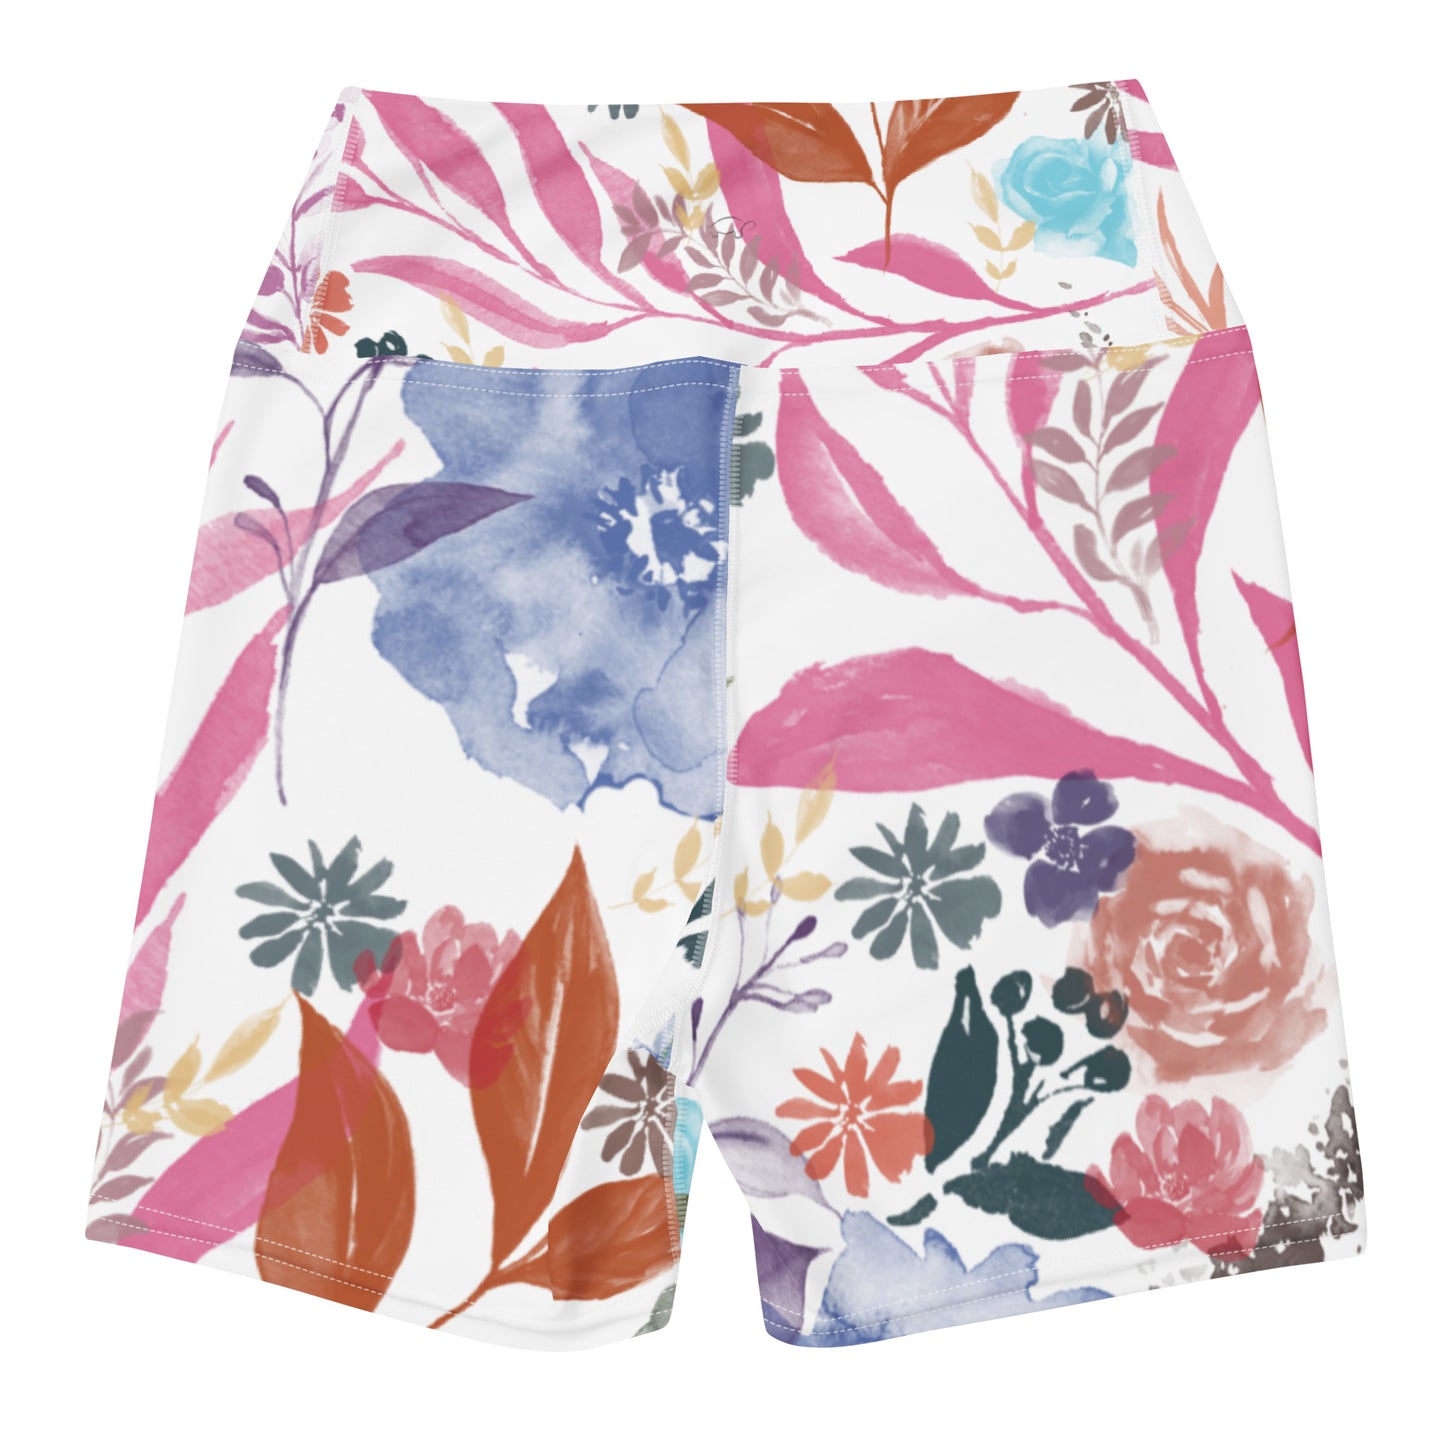 Multicolor Flowers White Yoga Shorts. Design hand-painted by the Designer Maria Alejandra Echenique